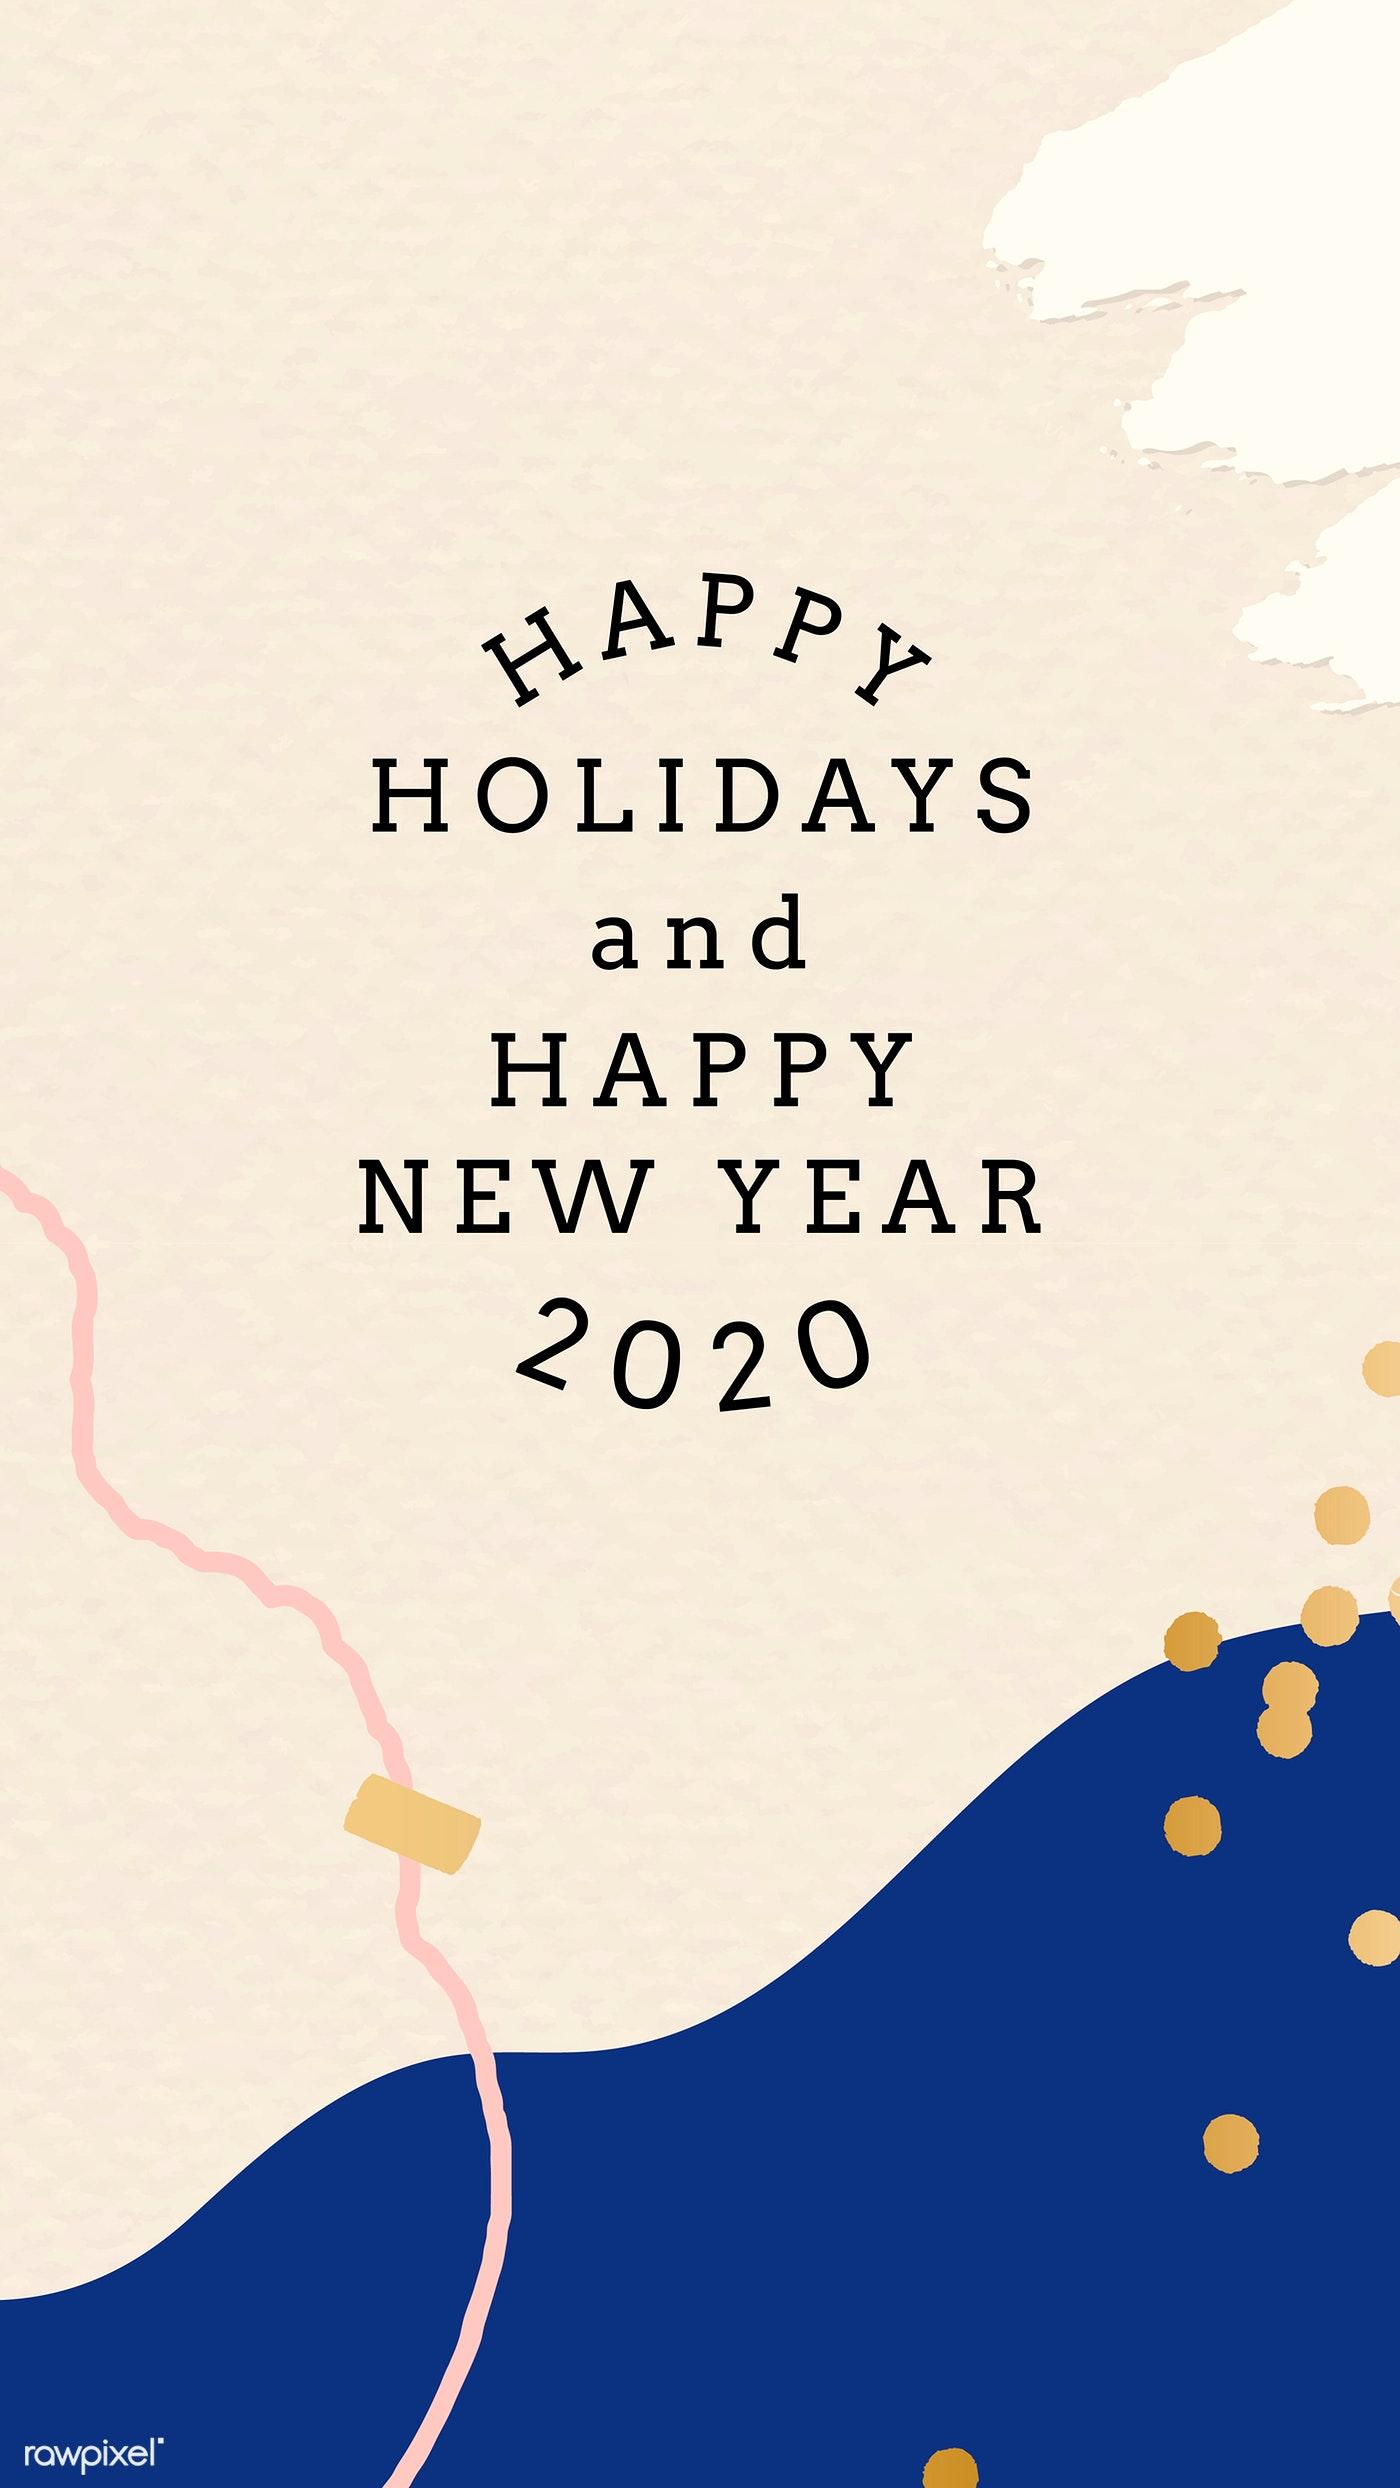 Download premium vector of Happy New Year 2020 Memphis design mobile phone